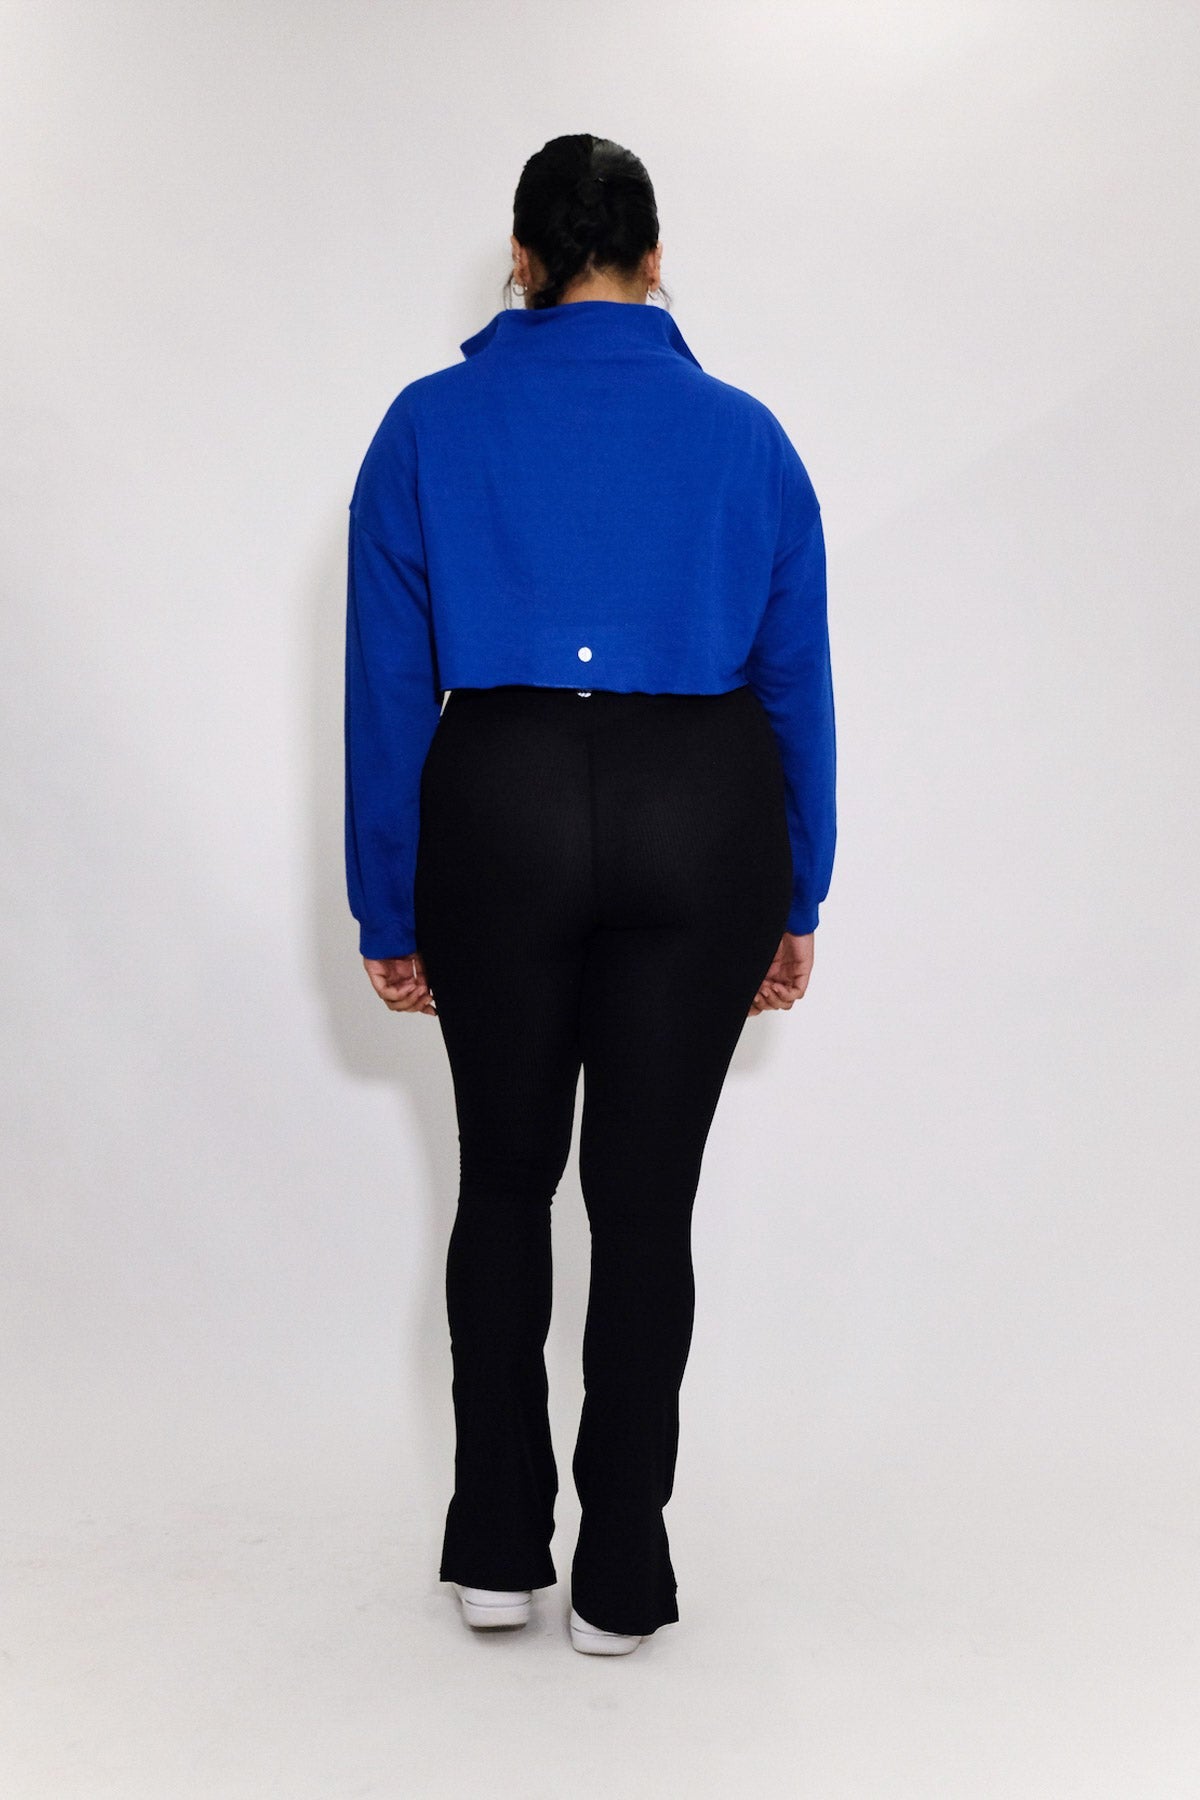 Snug Cropped Pullover in Dark Blue (2L LEFT)